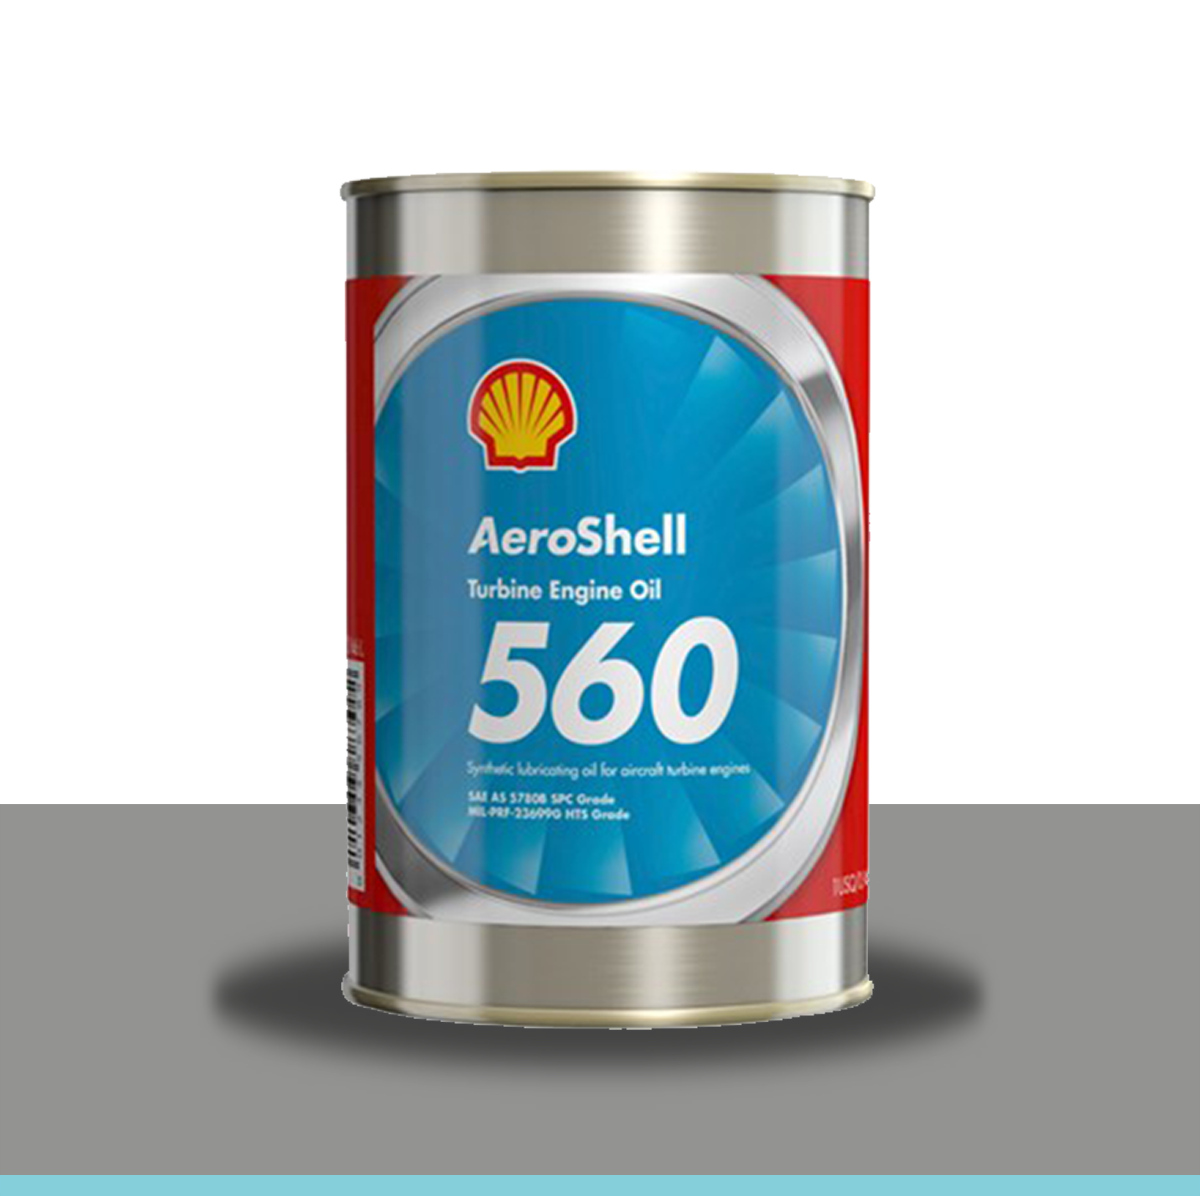 Aeroshell 560 tin